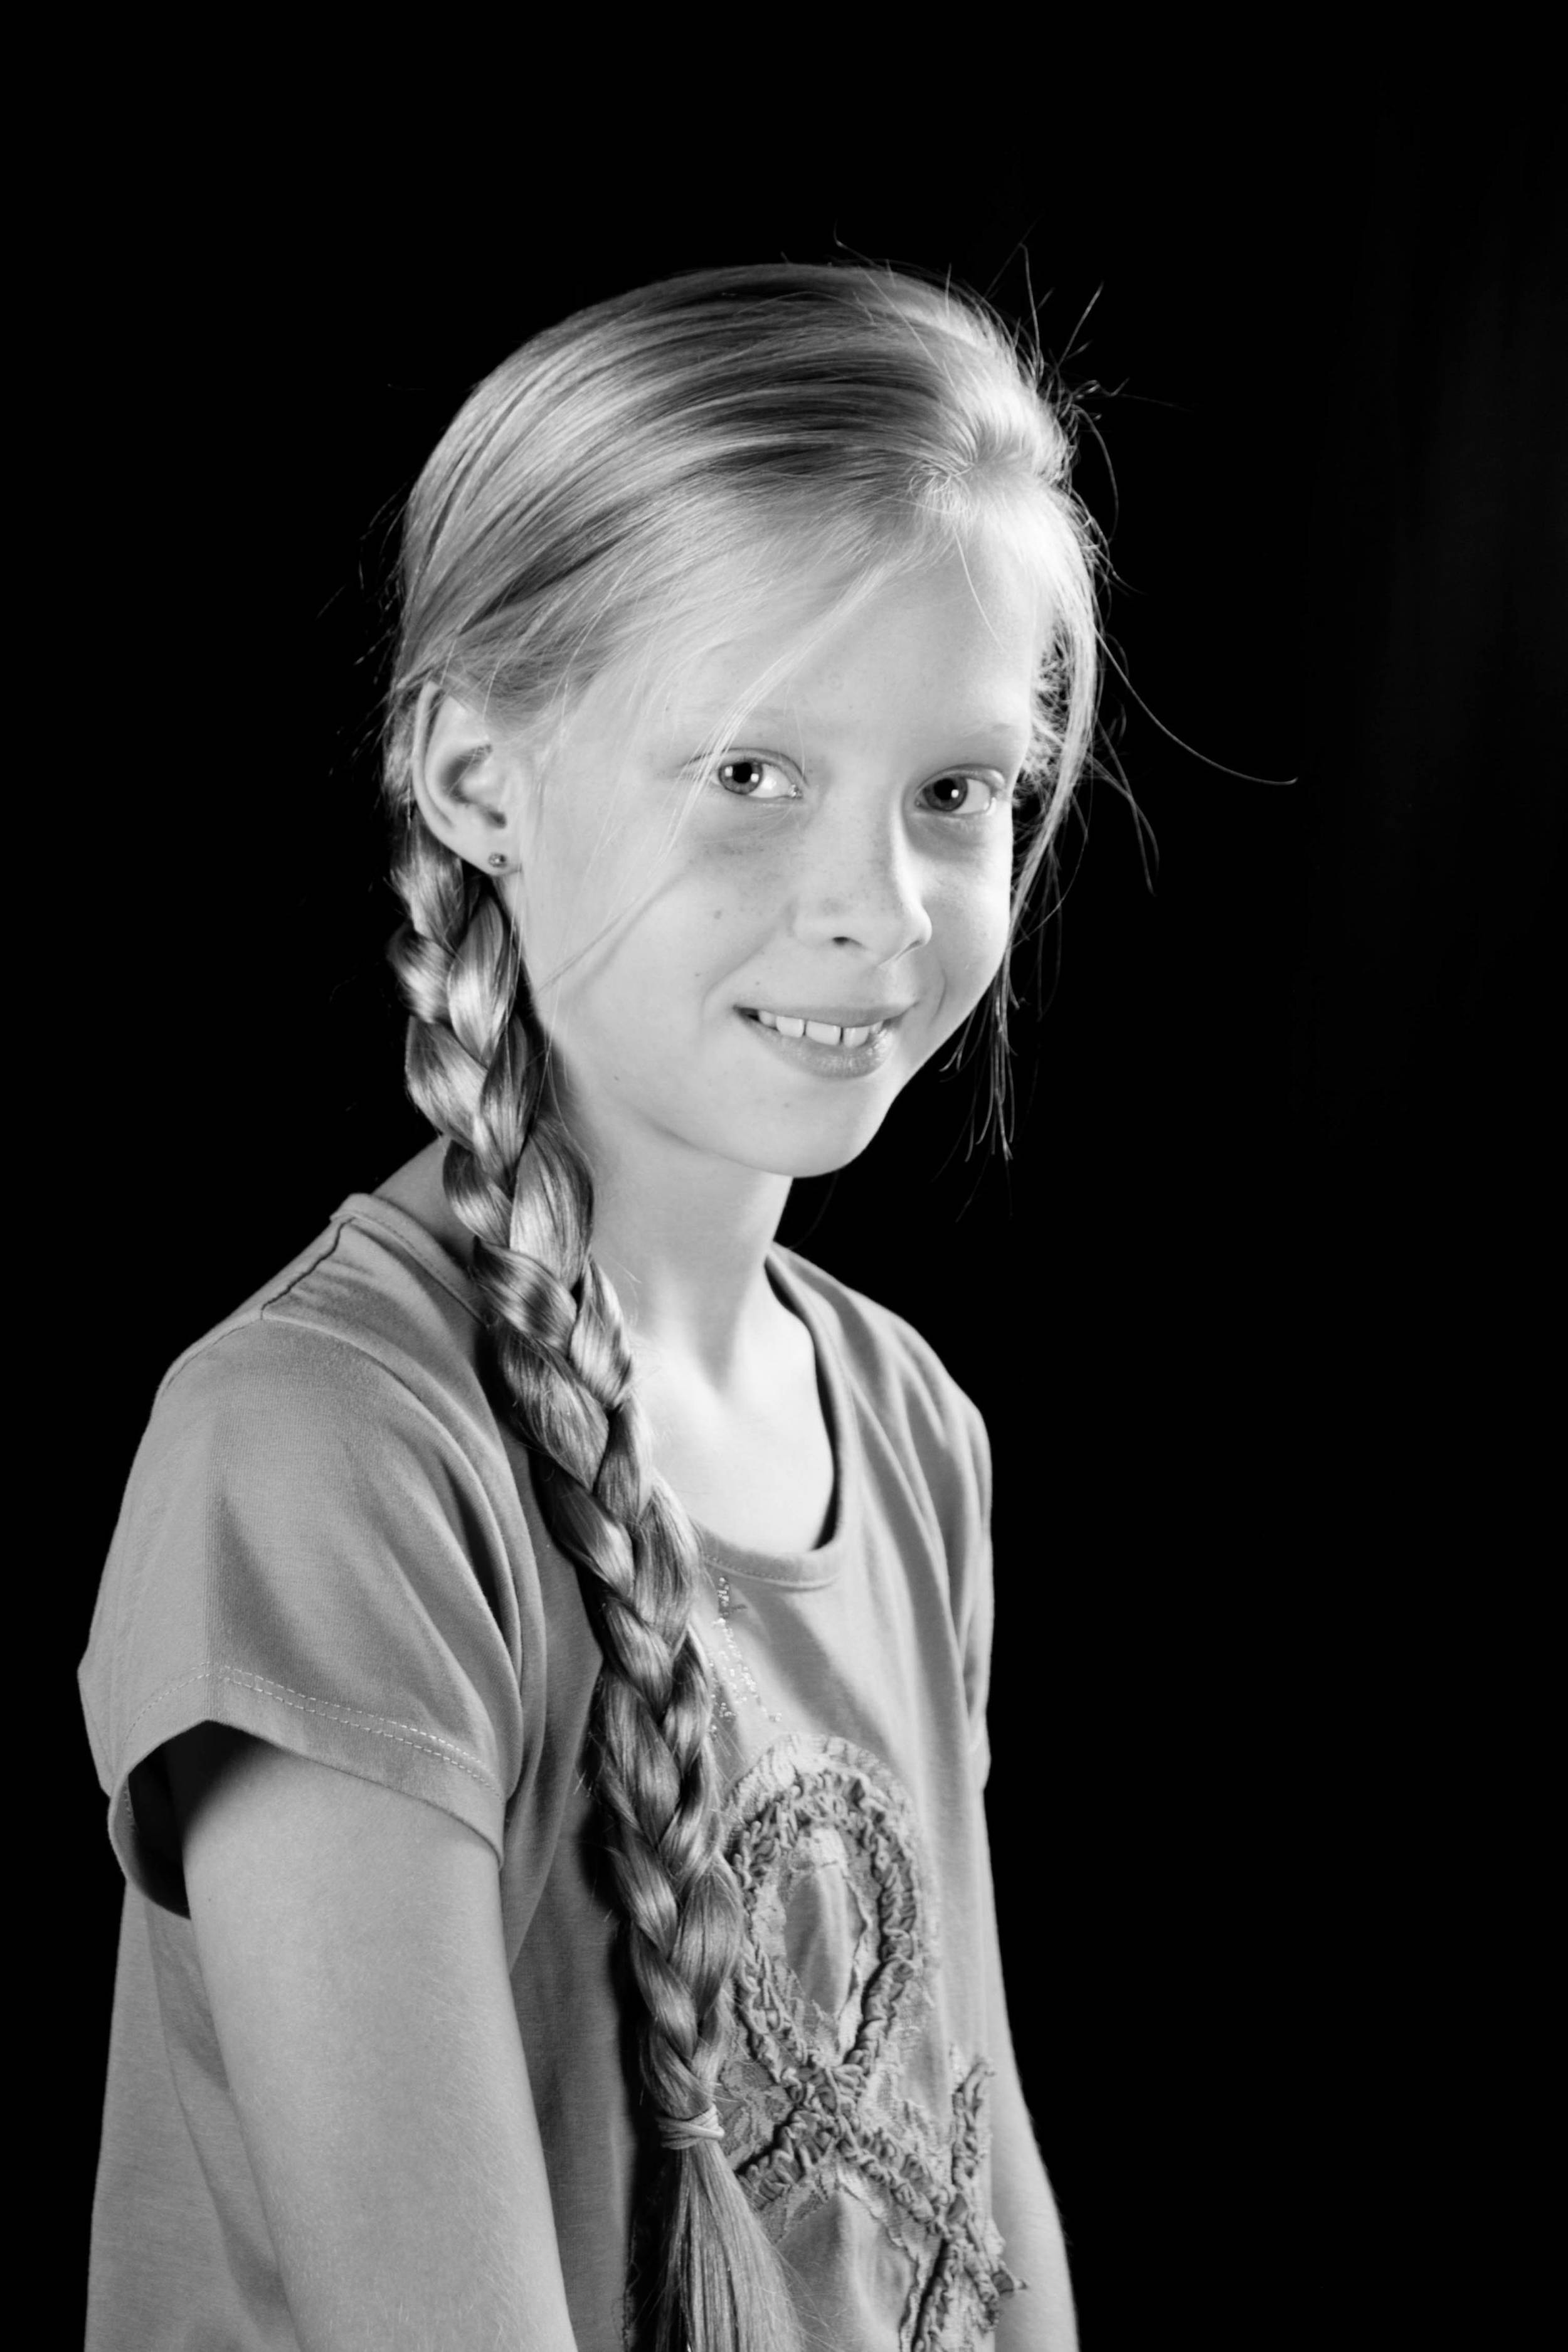 Happix-fotograaf-Conny-Stampersgat-Kinderfotografie-020_DIOBfhbfU.jpg